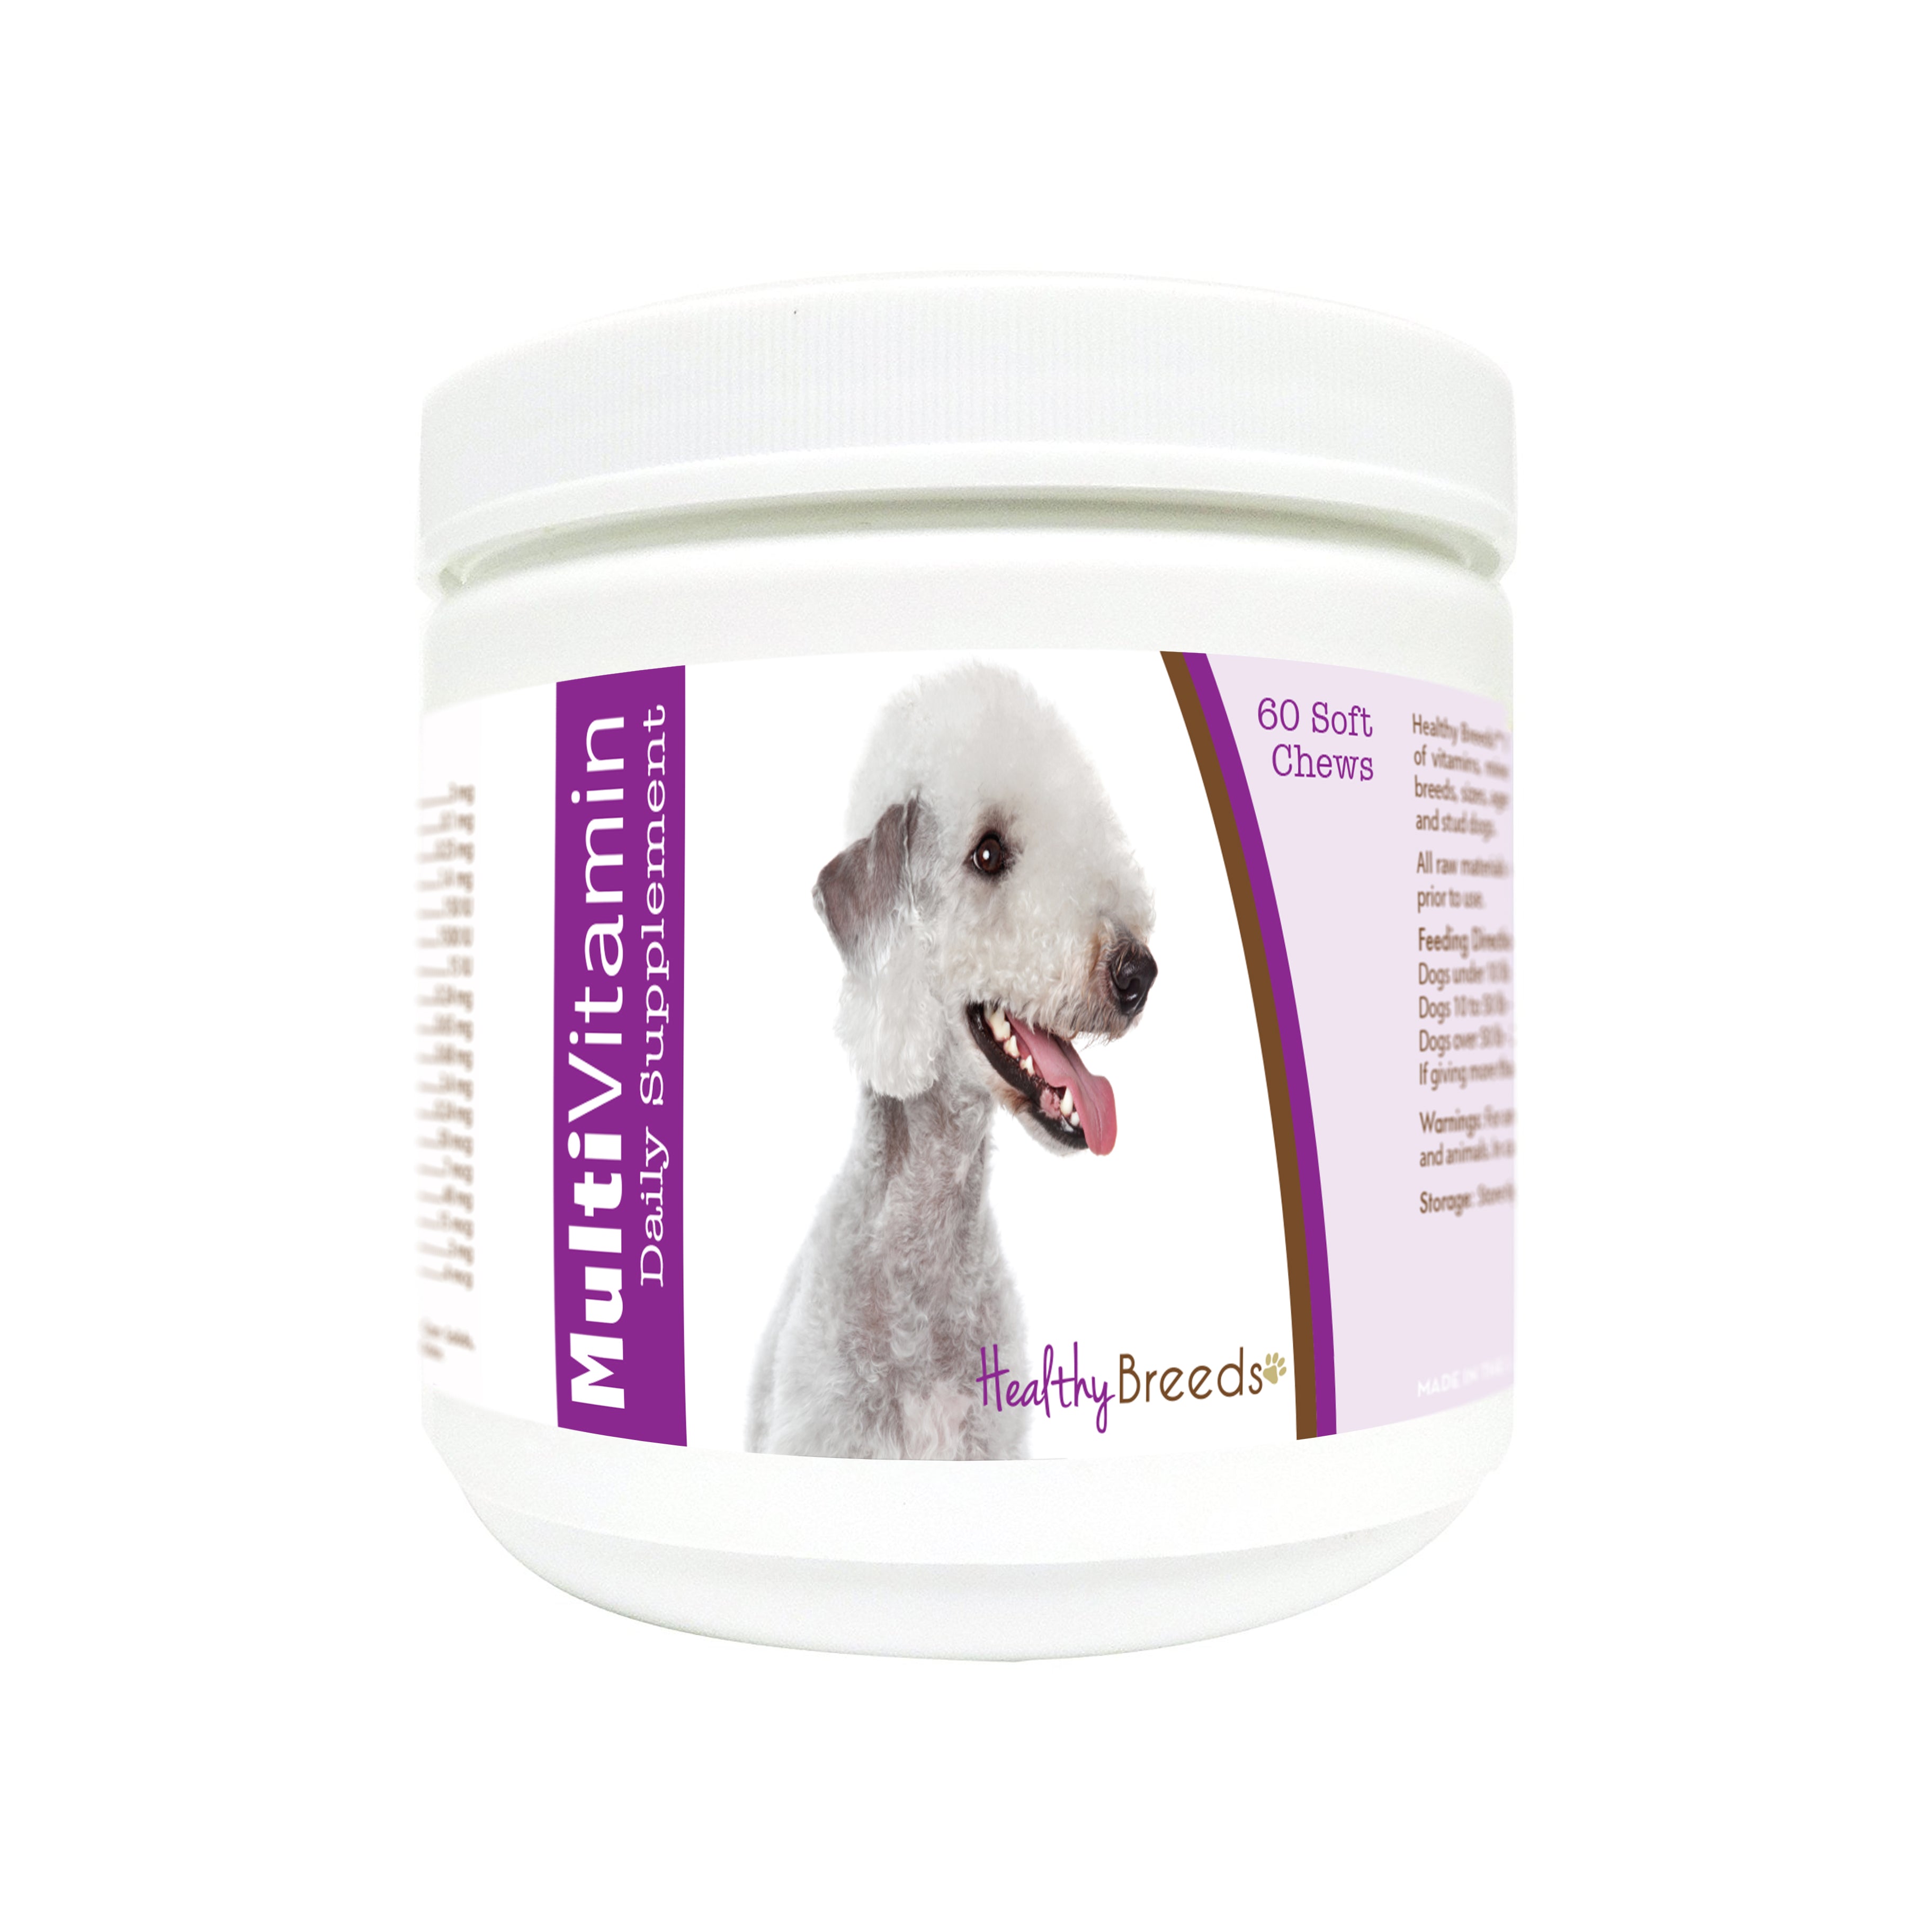 Bedlington Terrier Multi-Vitamin Soft Chews 60 Count